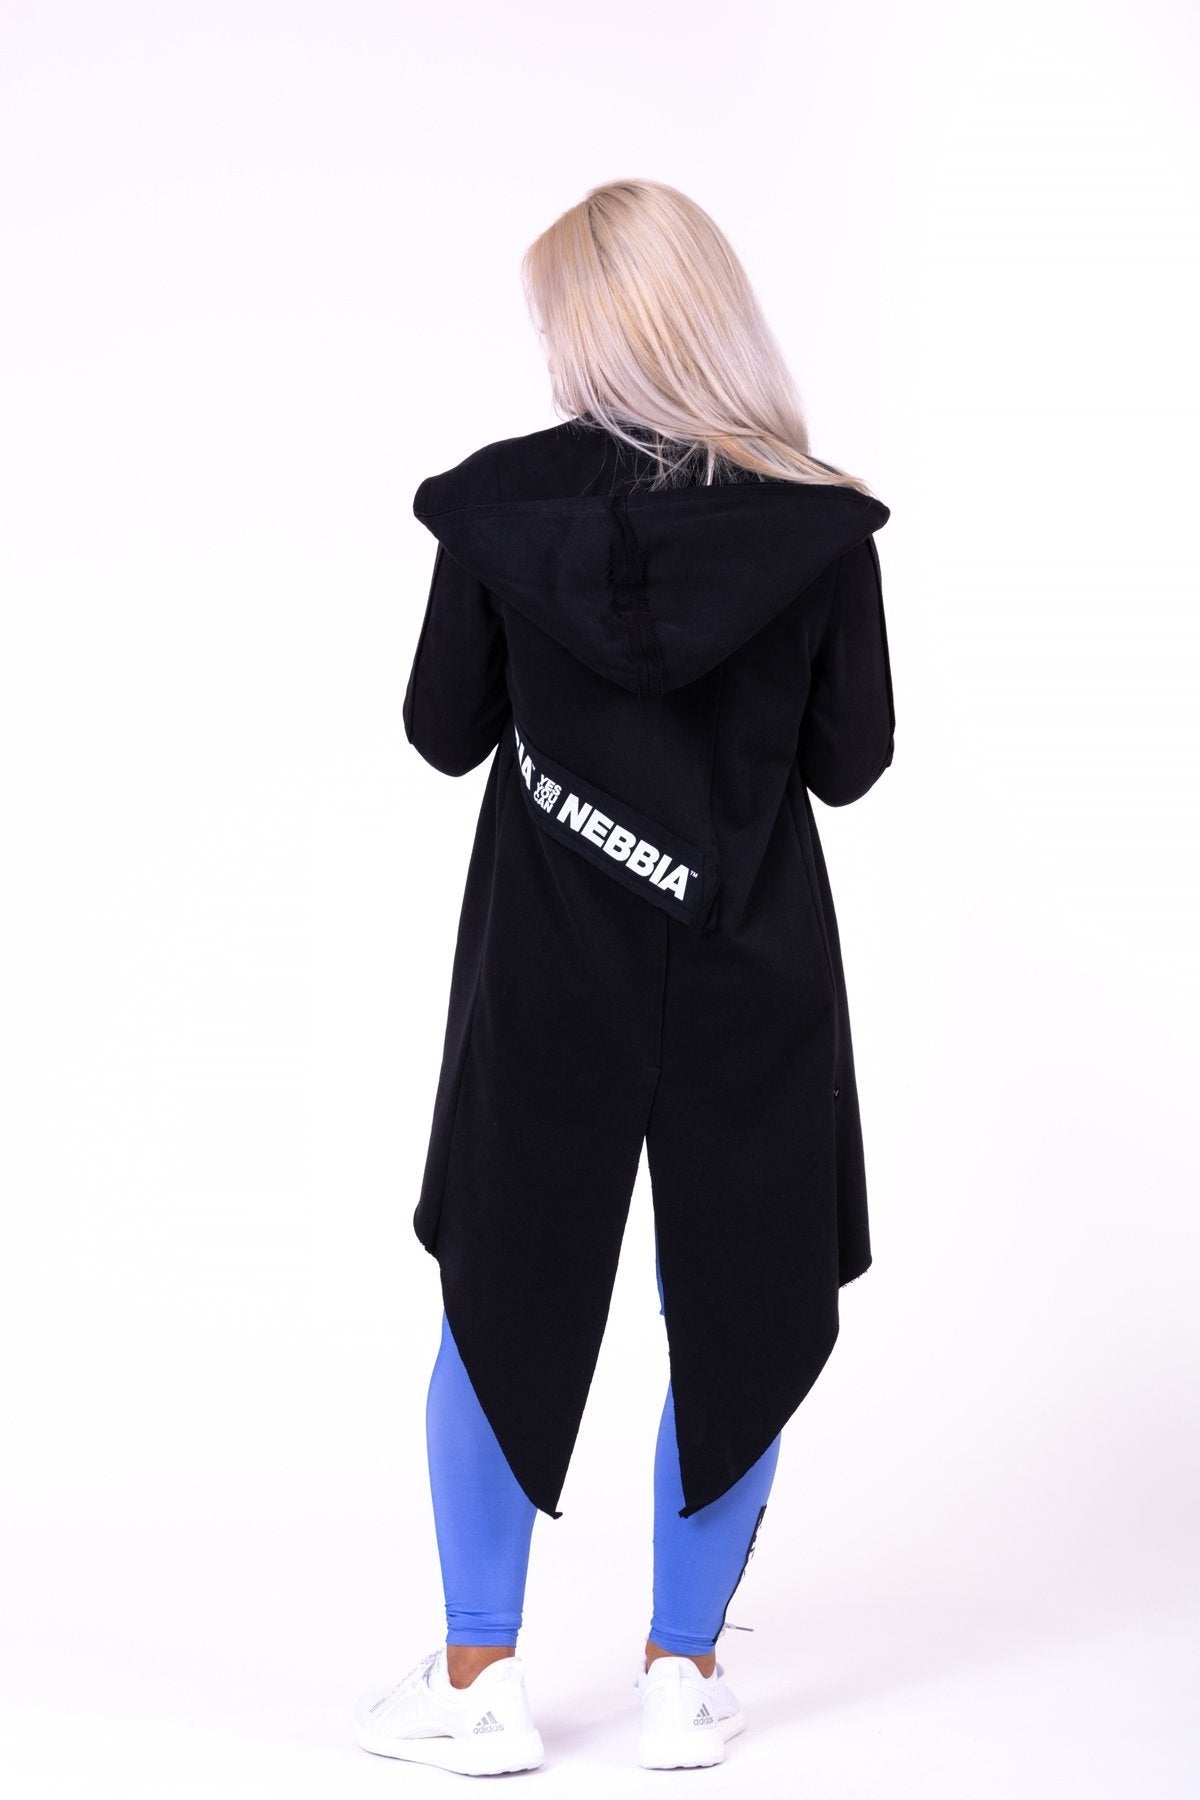 Nebbia Be Rebel! Tail Coat Jacket 681 - Black - Urban Gym Wear